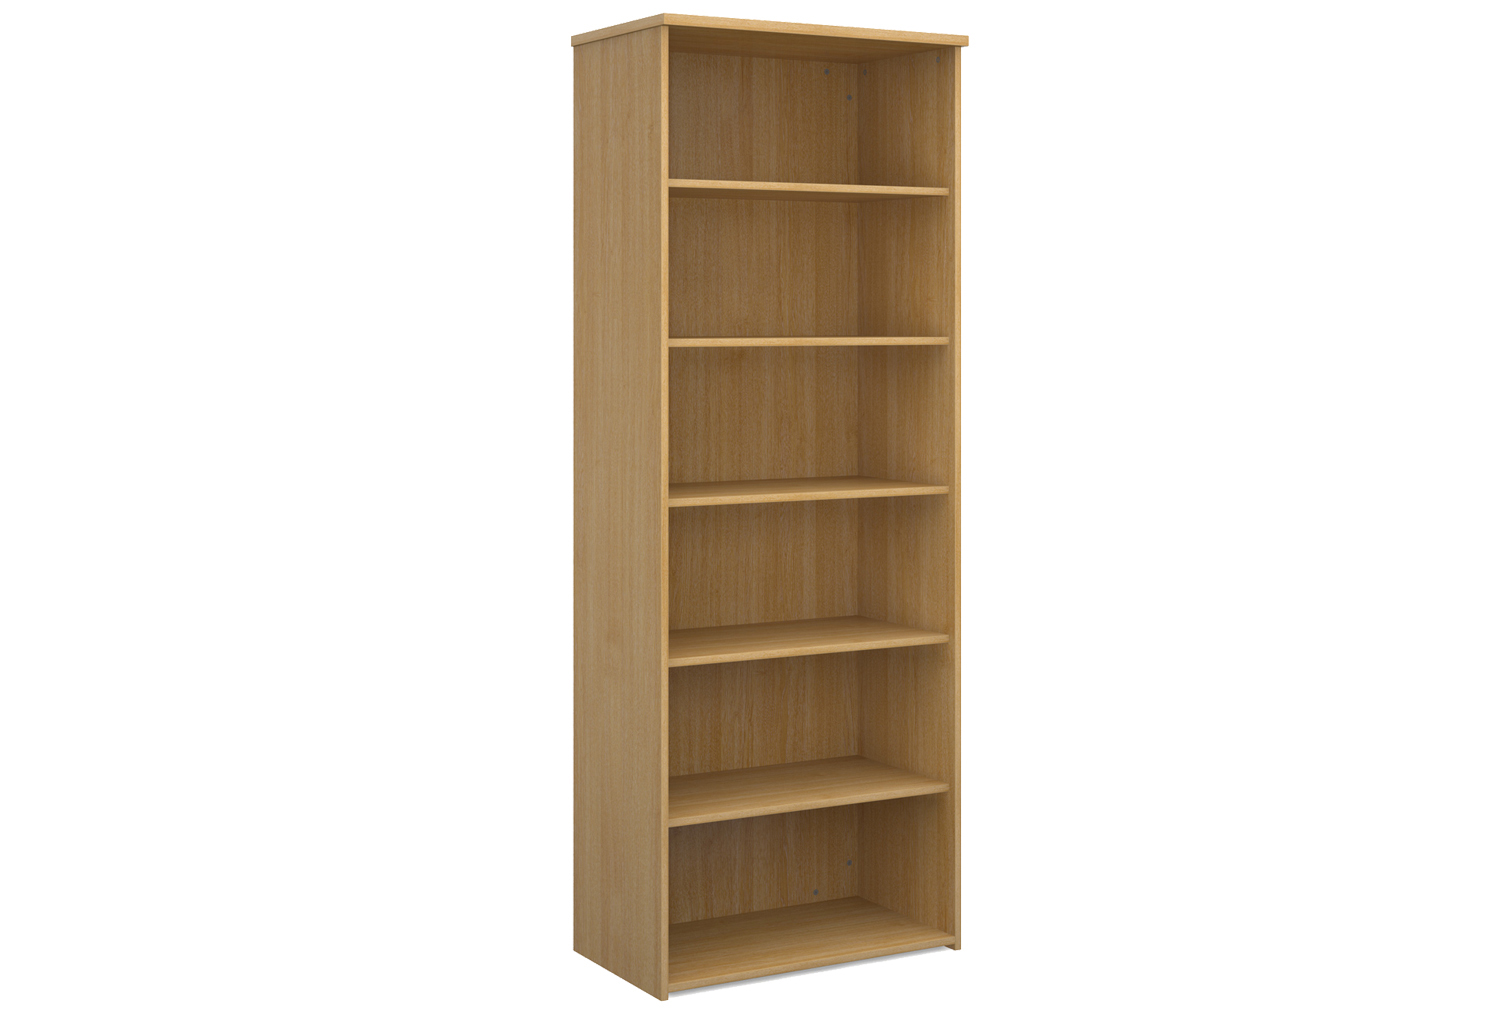 All Oak Office Bookcases, 5 Shelf - 80wx47dx214h (cm)